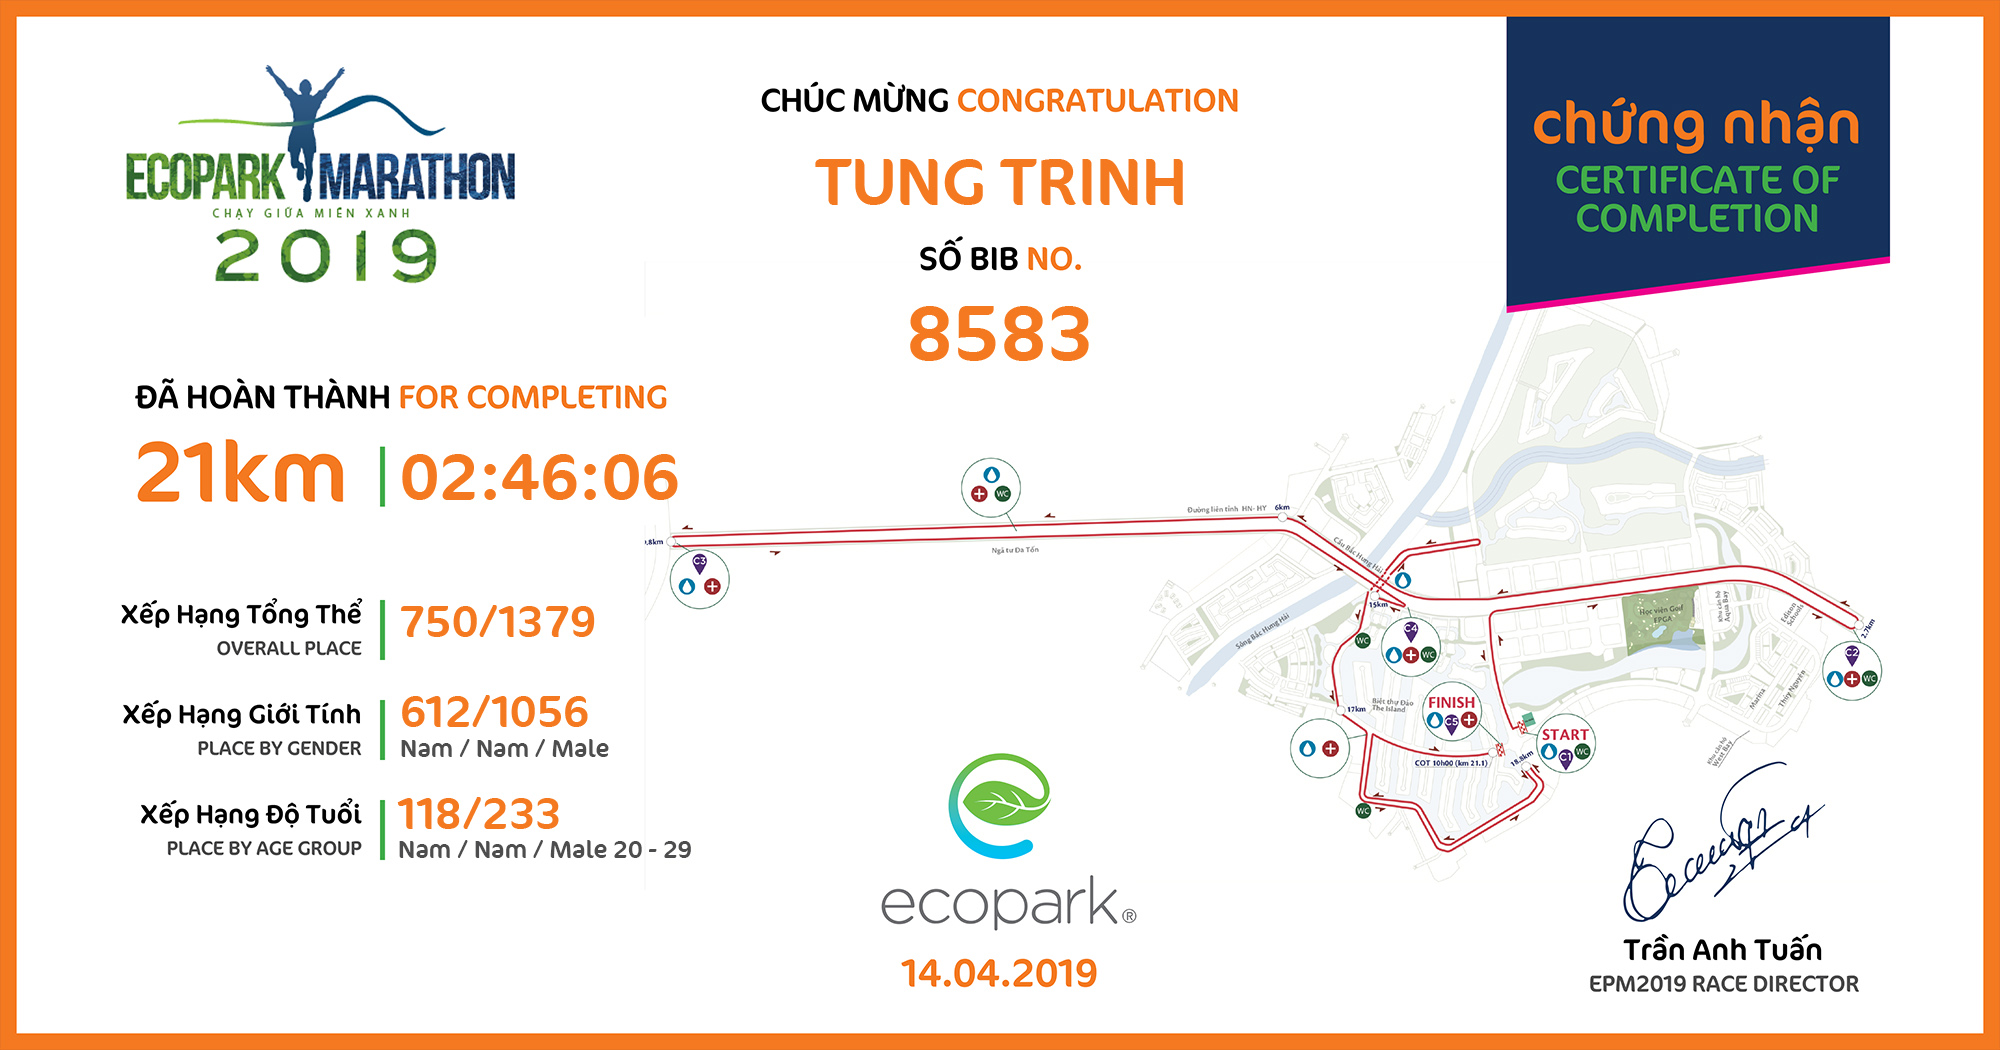 8583 - Tung Trinh